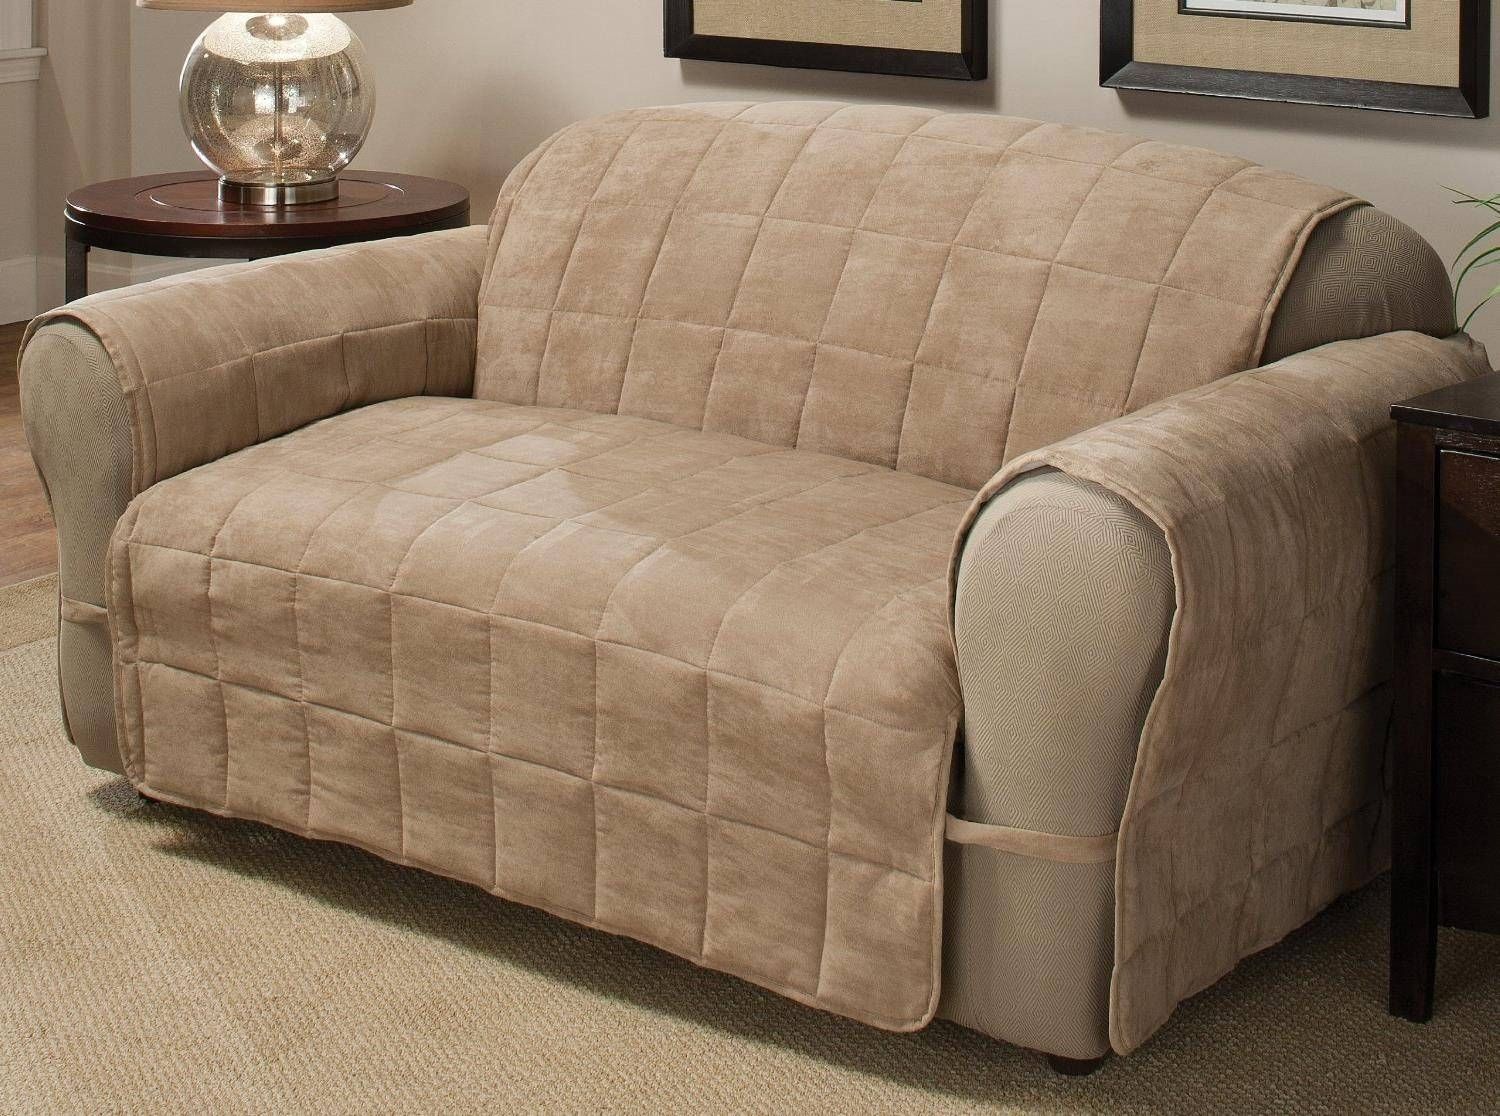 leather sofa covers lovesac